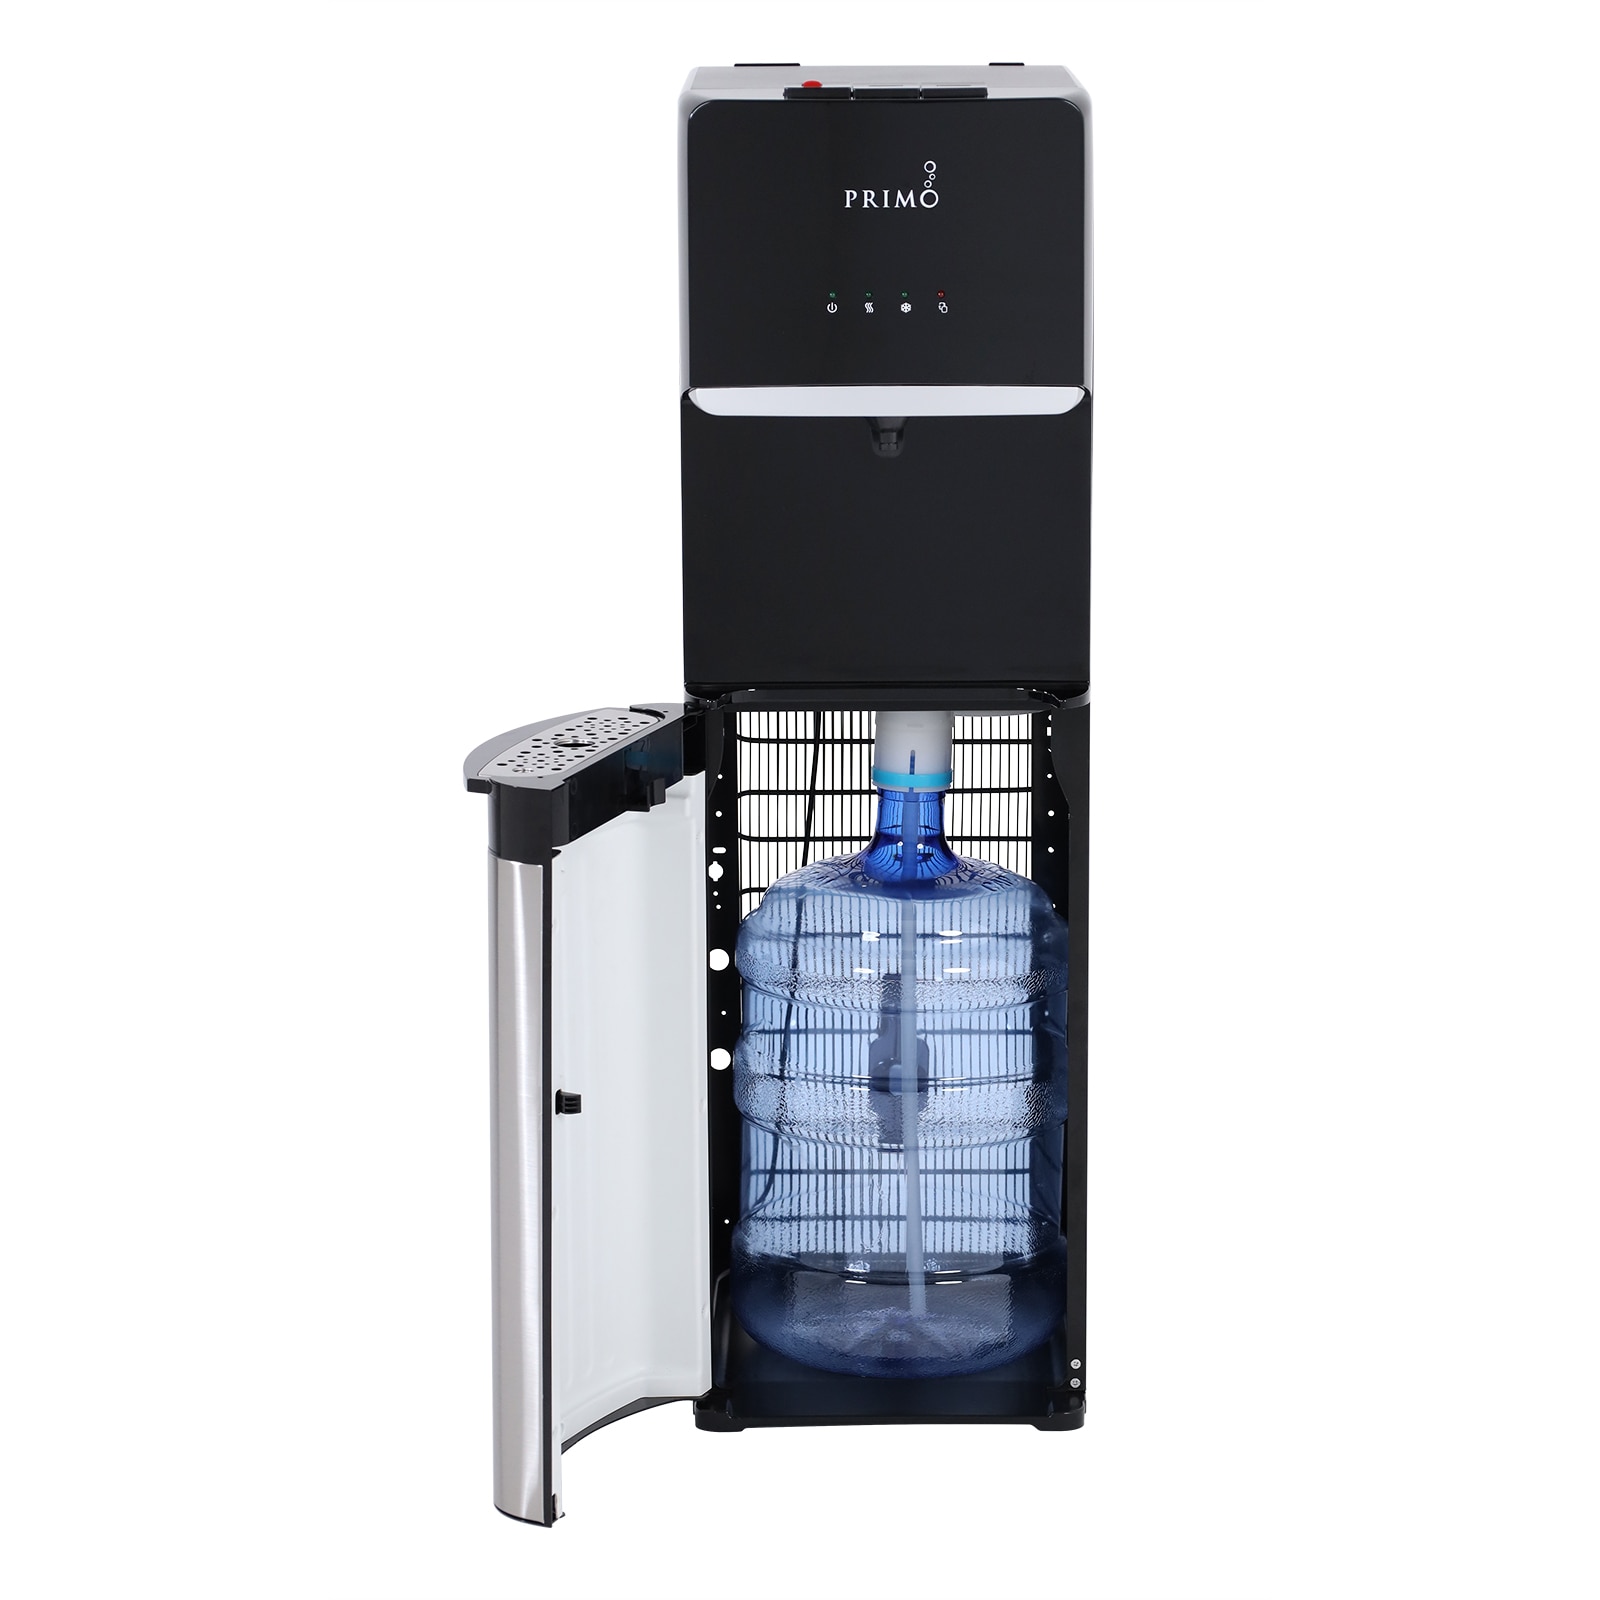 1.1 Gallon Refrigerator Water Dispensers Bottle with Faucet, Spigot &a